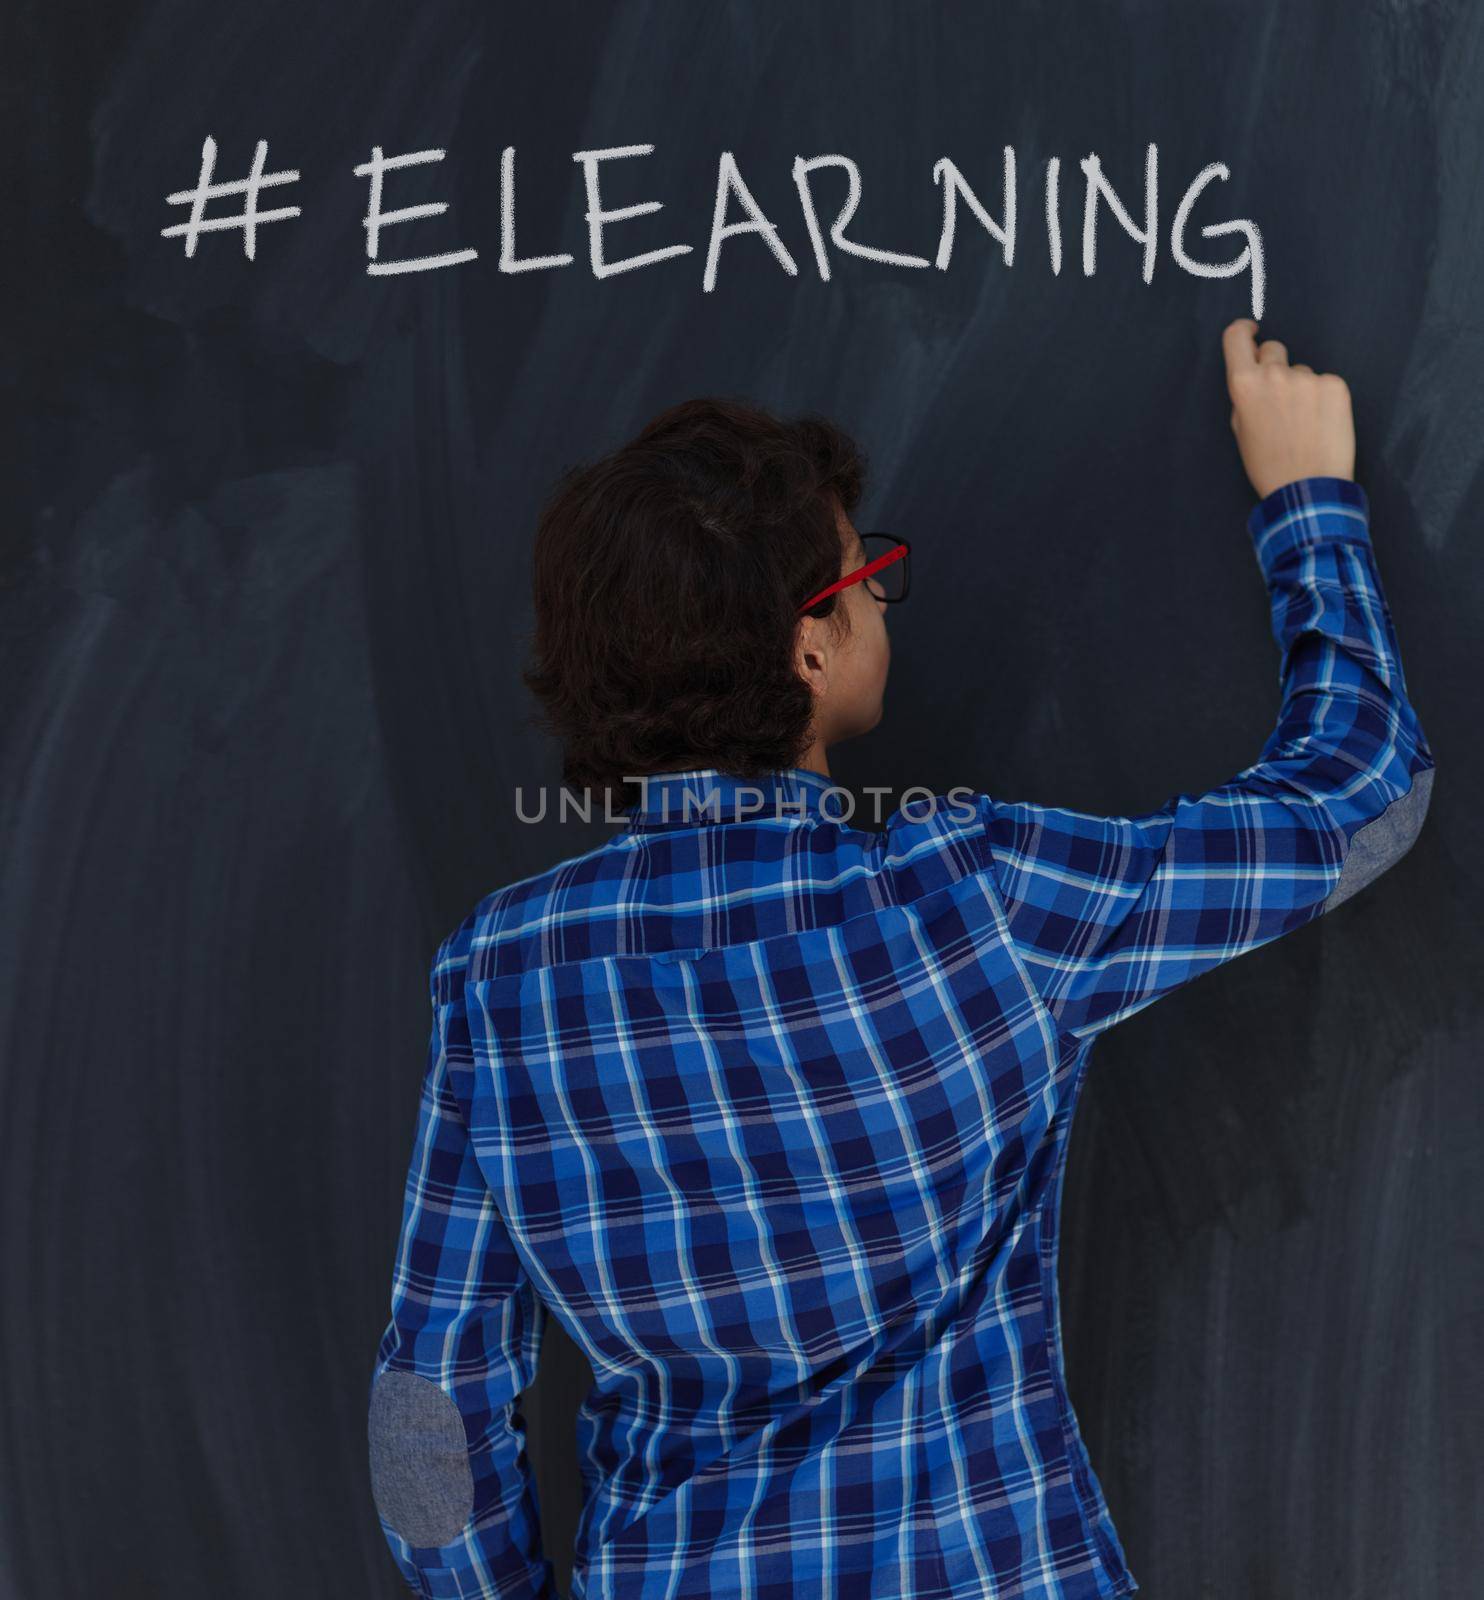 Teen Boy with chalk  writing on black chalkboard hashtag elearning by dotshock